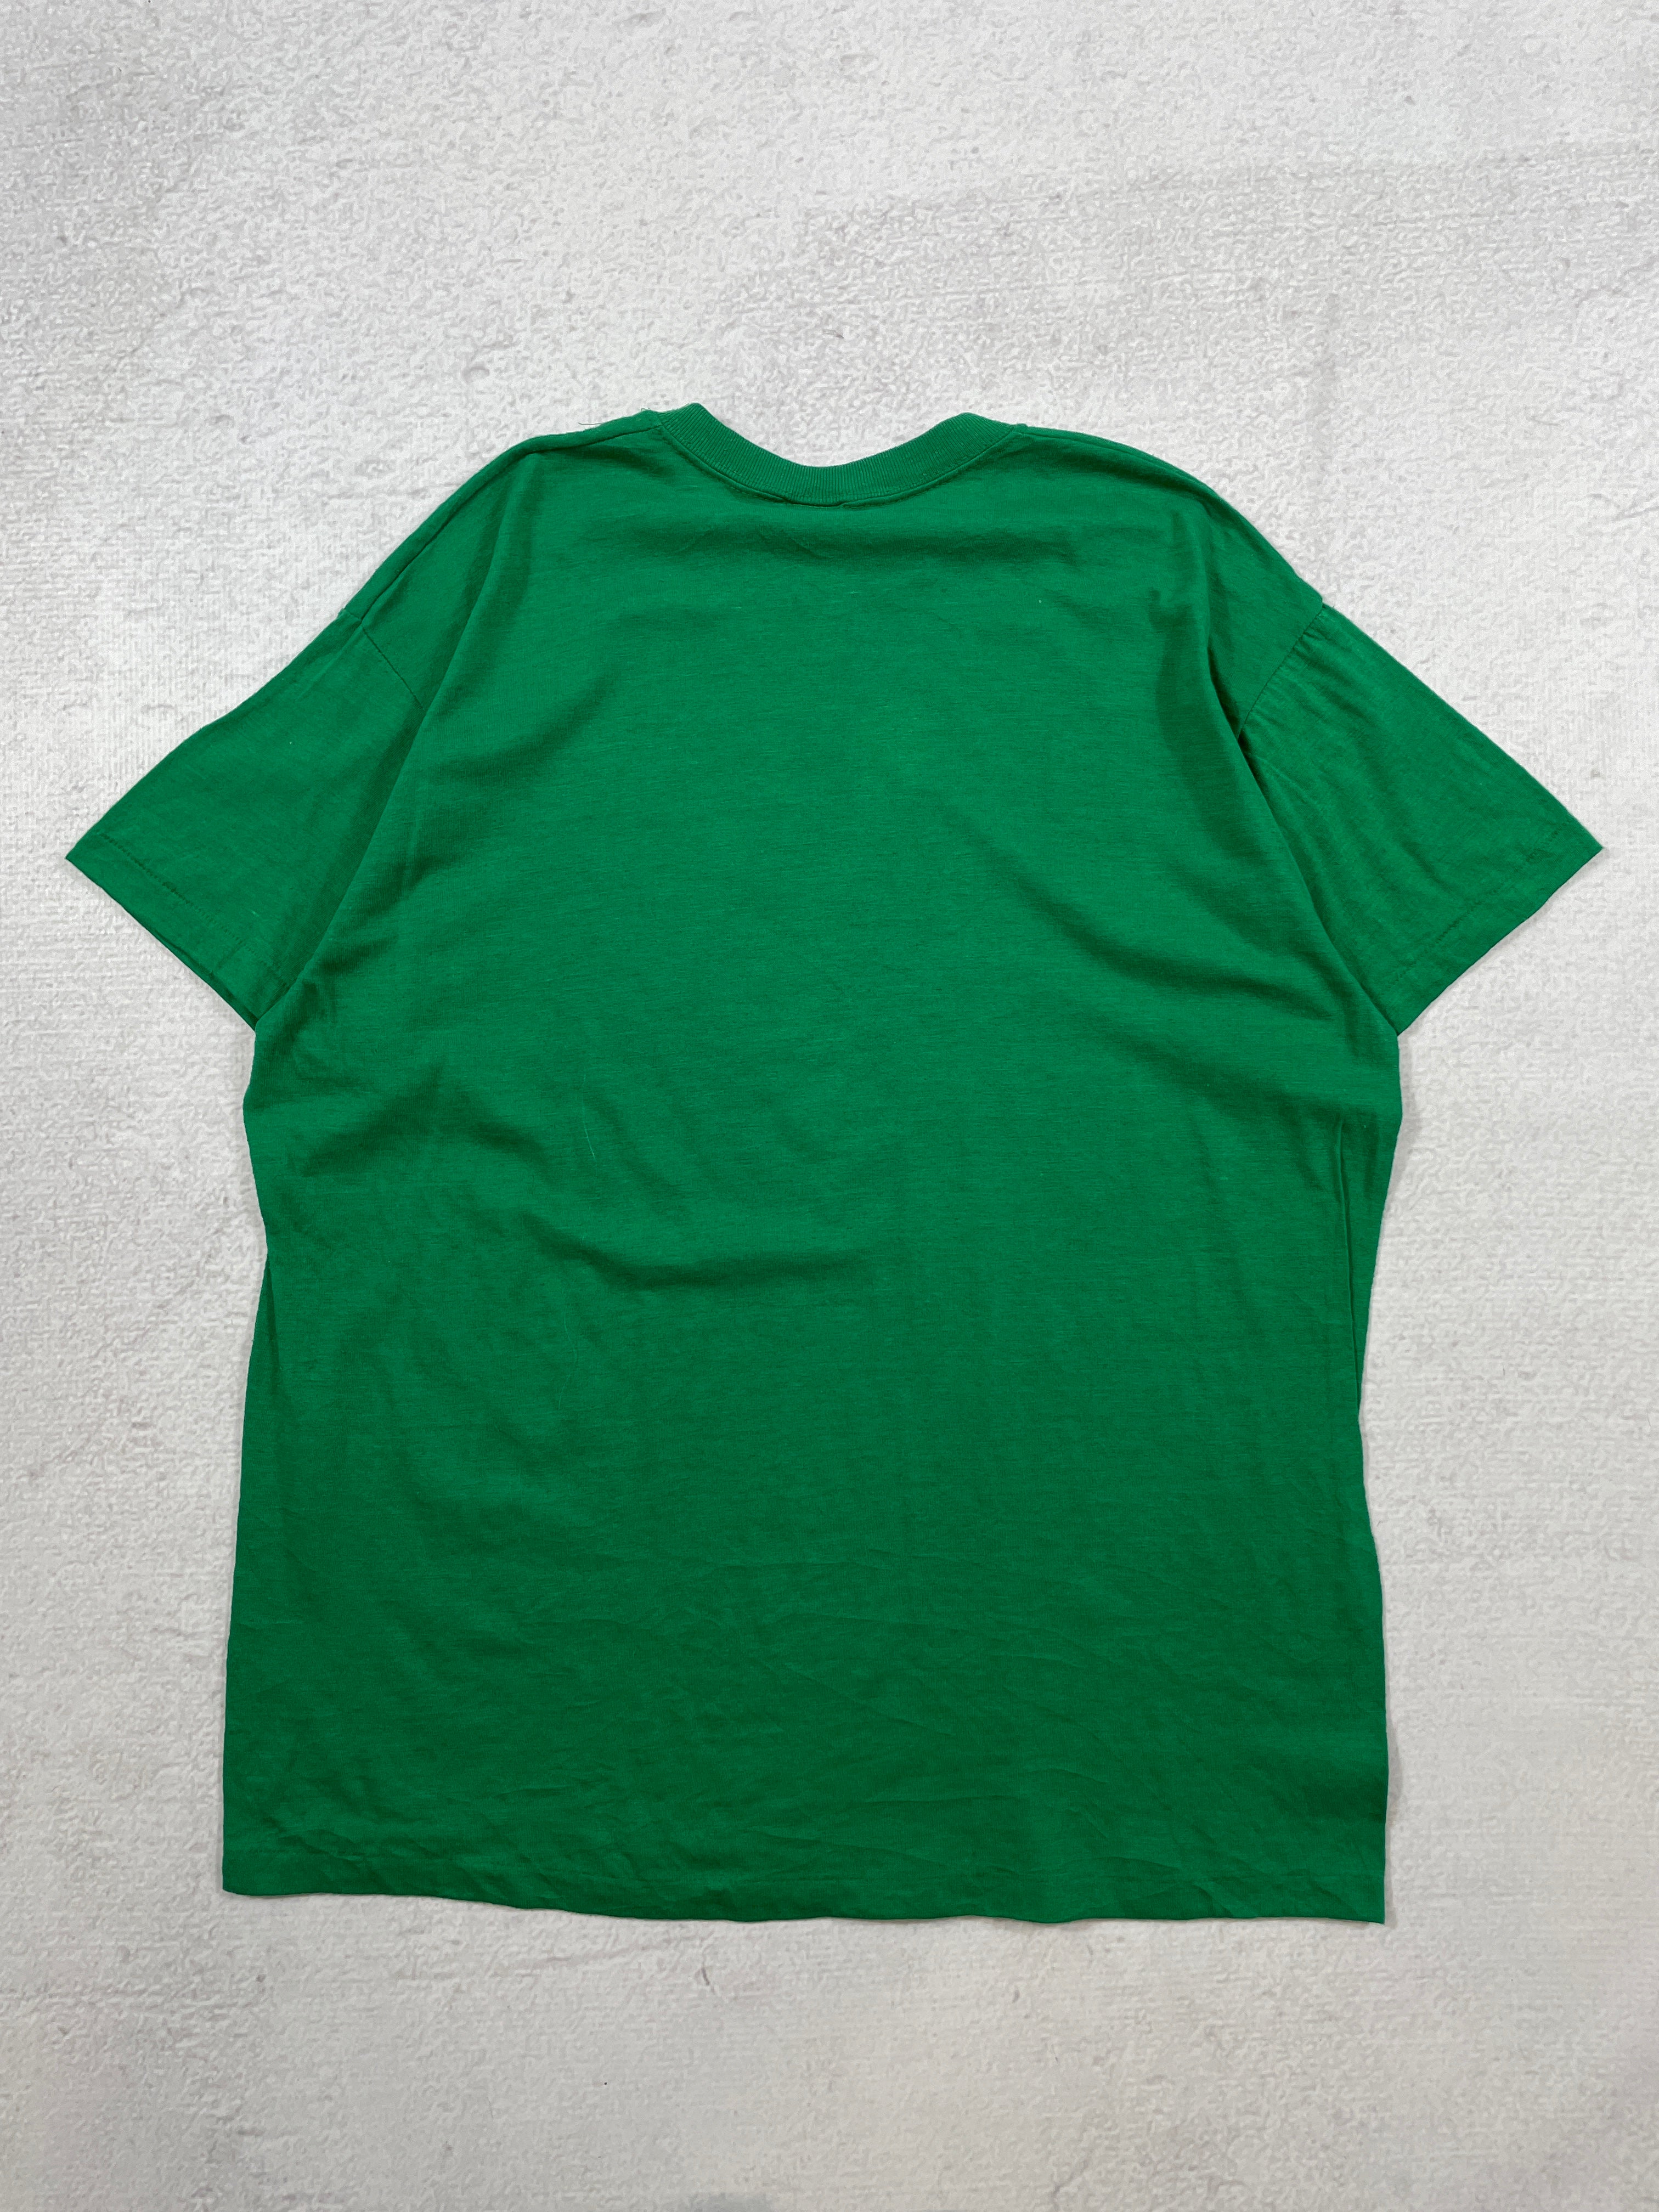 Vintage NBA Boston Celtics T-Shirt - Men's XL